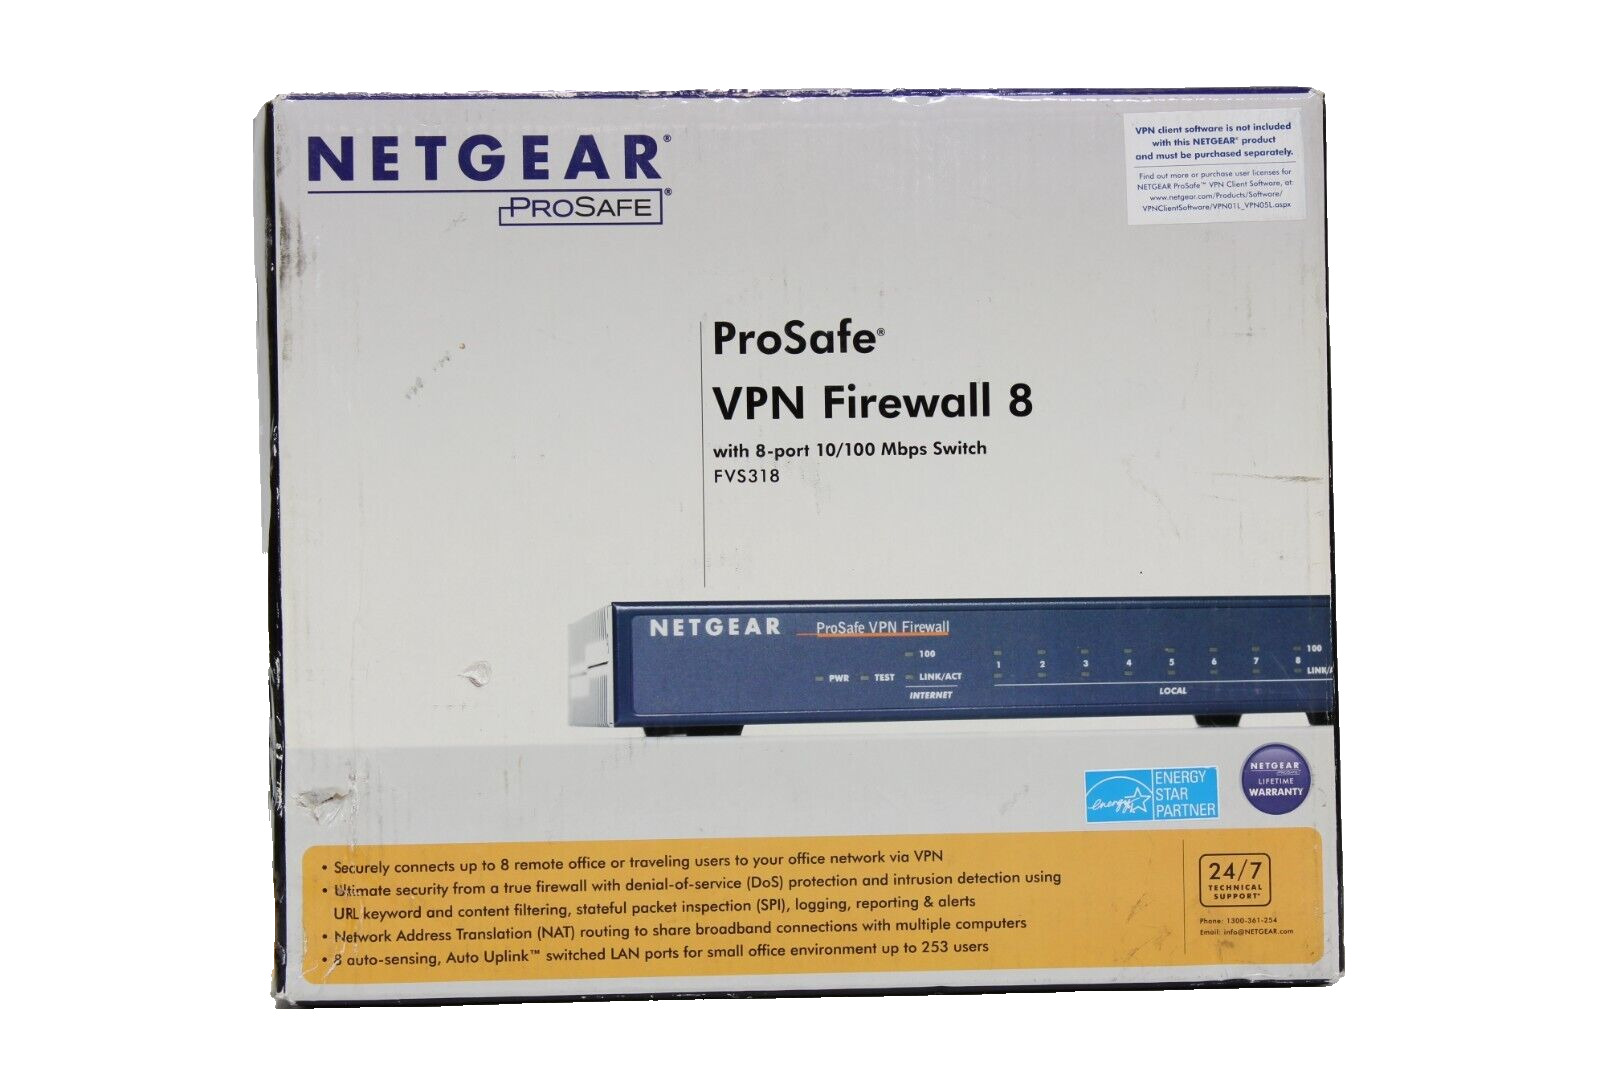 Netgear FVS318 ProSafe VPN Firewall 8 with 8-port 10/100 Mbps Switch